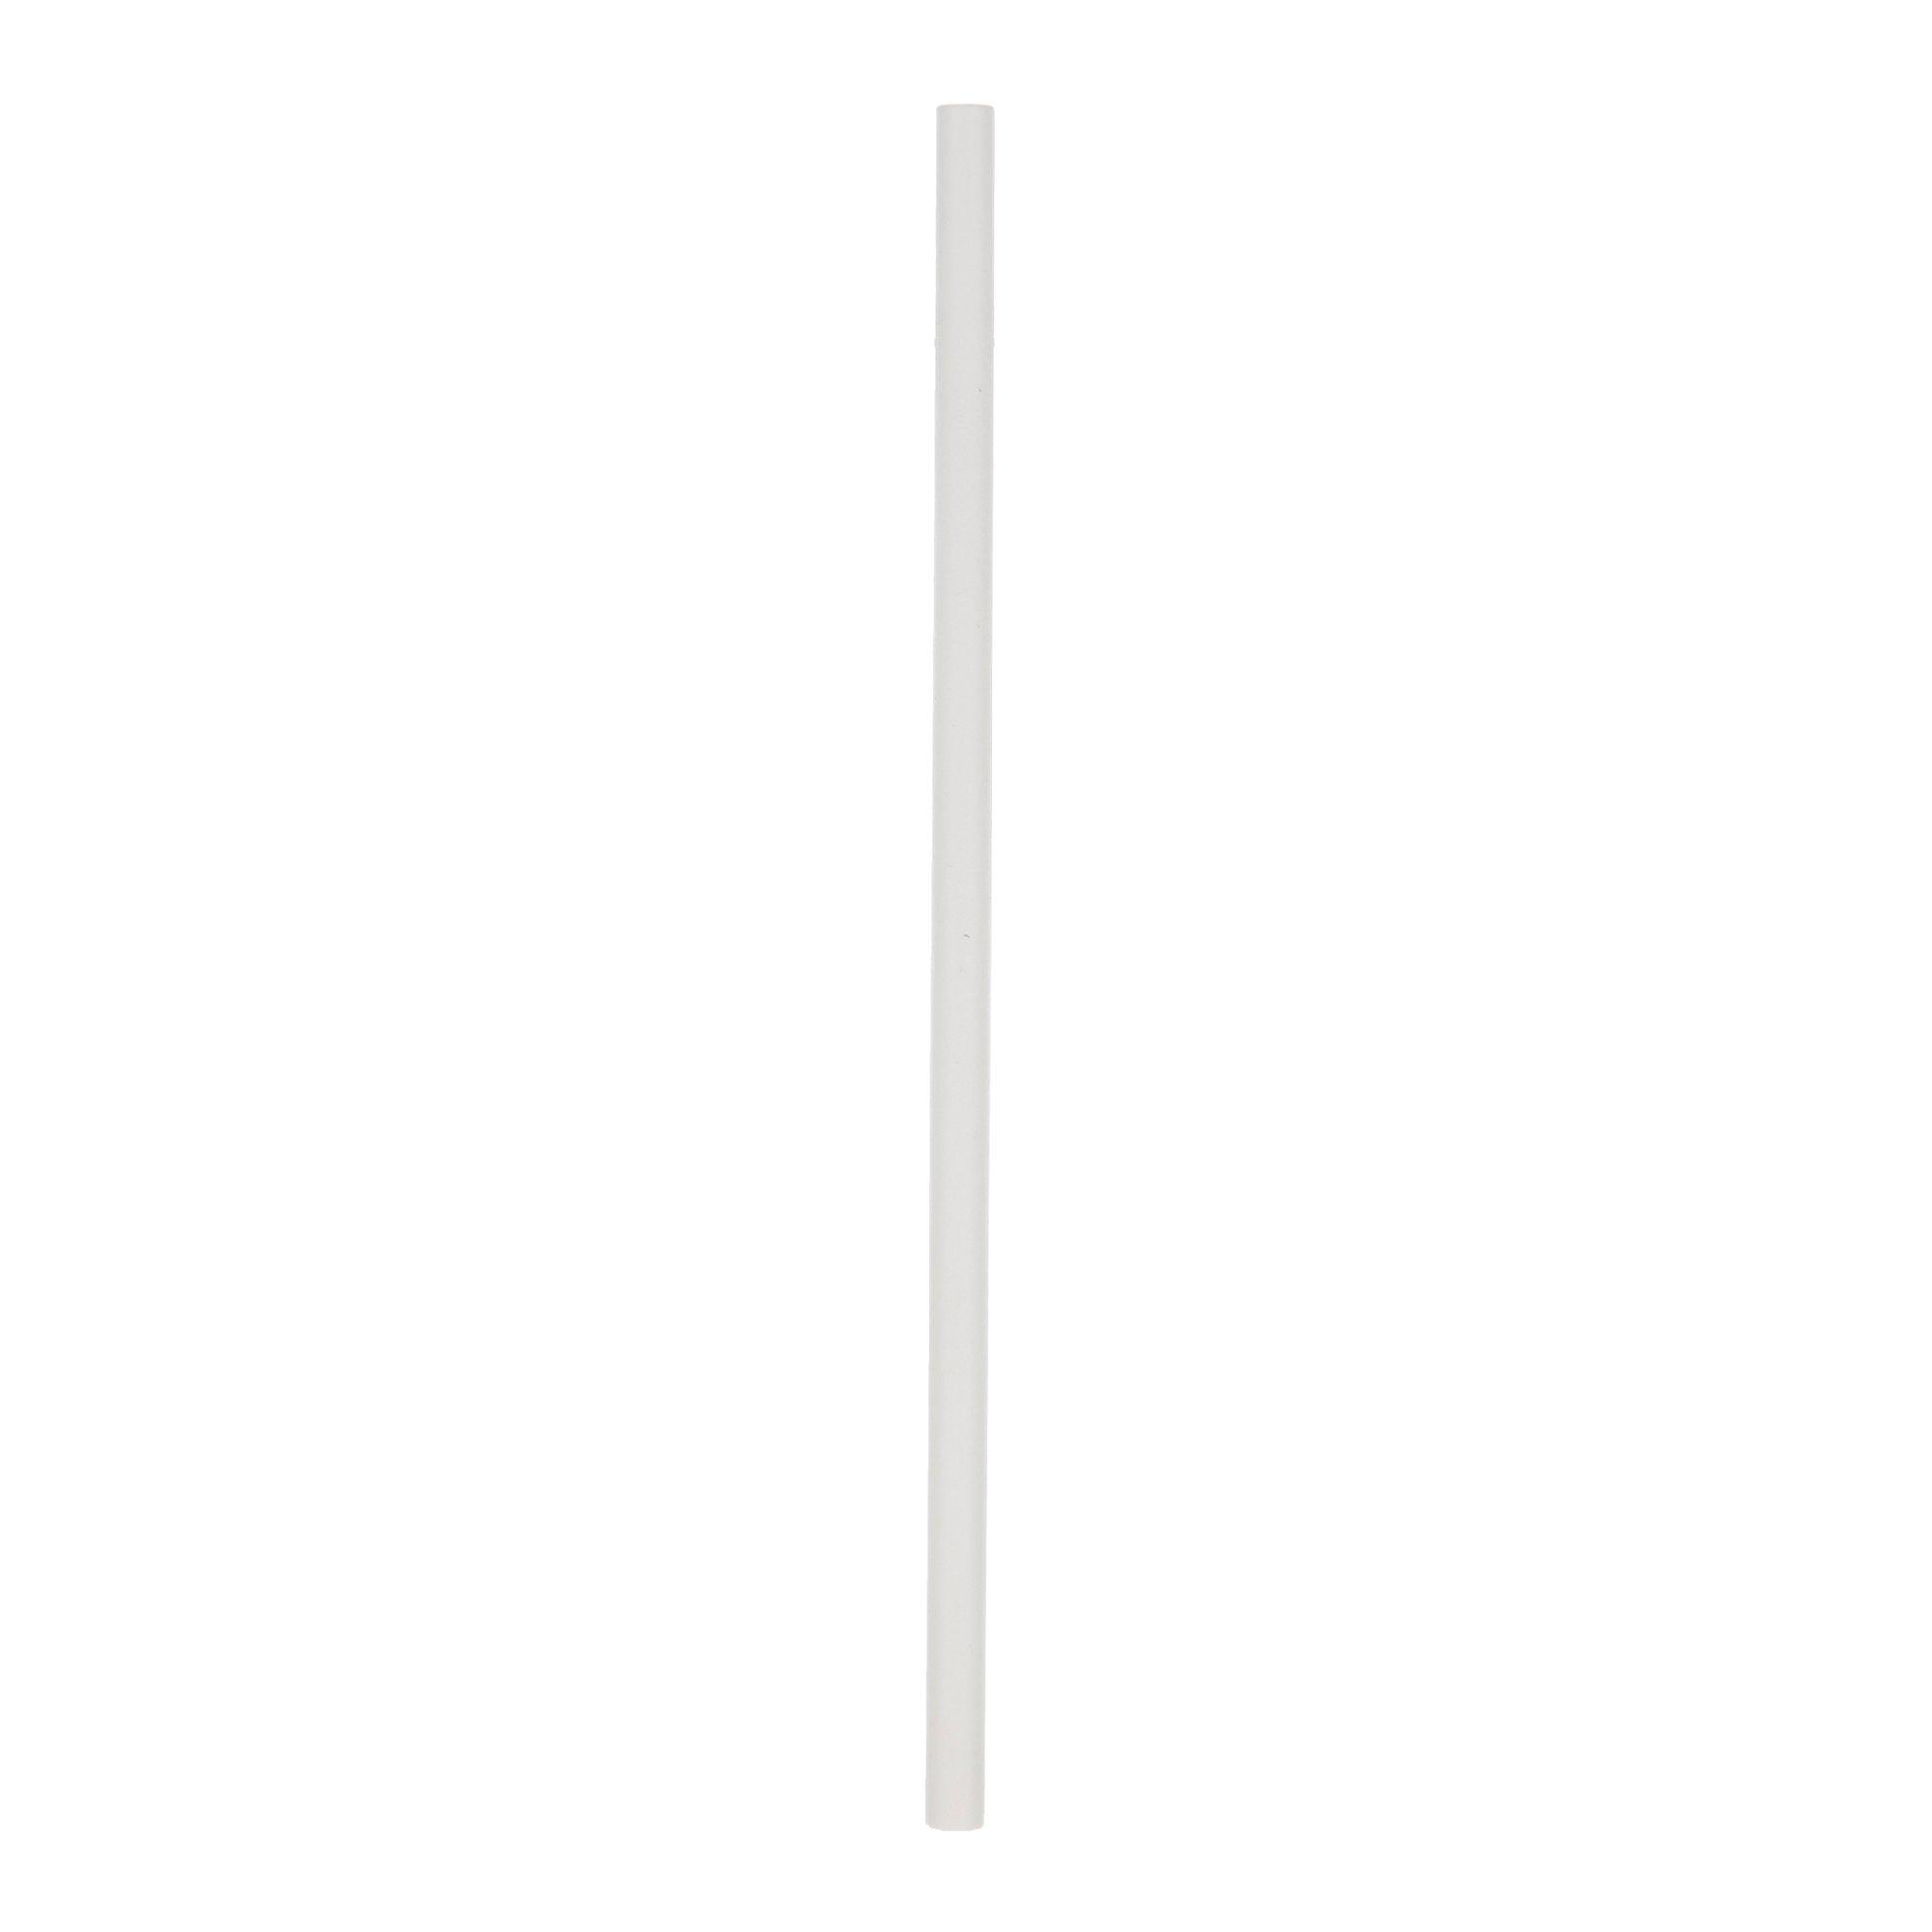 Babycakes 6-Inch Paper Treat Sticks, 50-Count, White